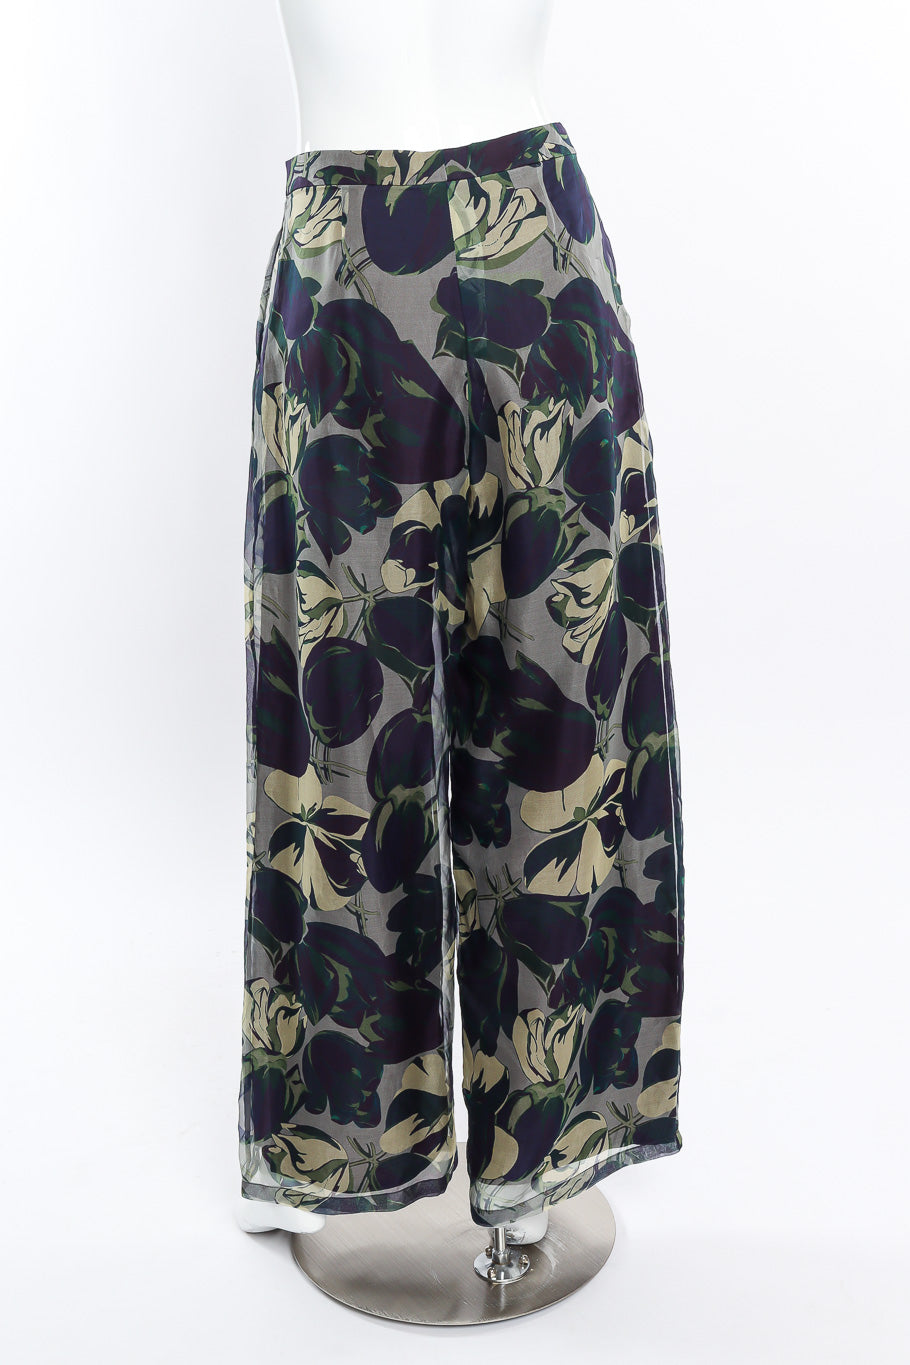 Dries Van Noten Floral Silk Lounge Pant back view on mannequin @Recessla